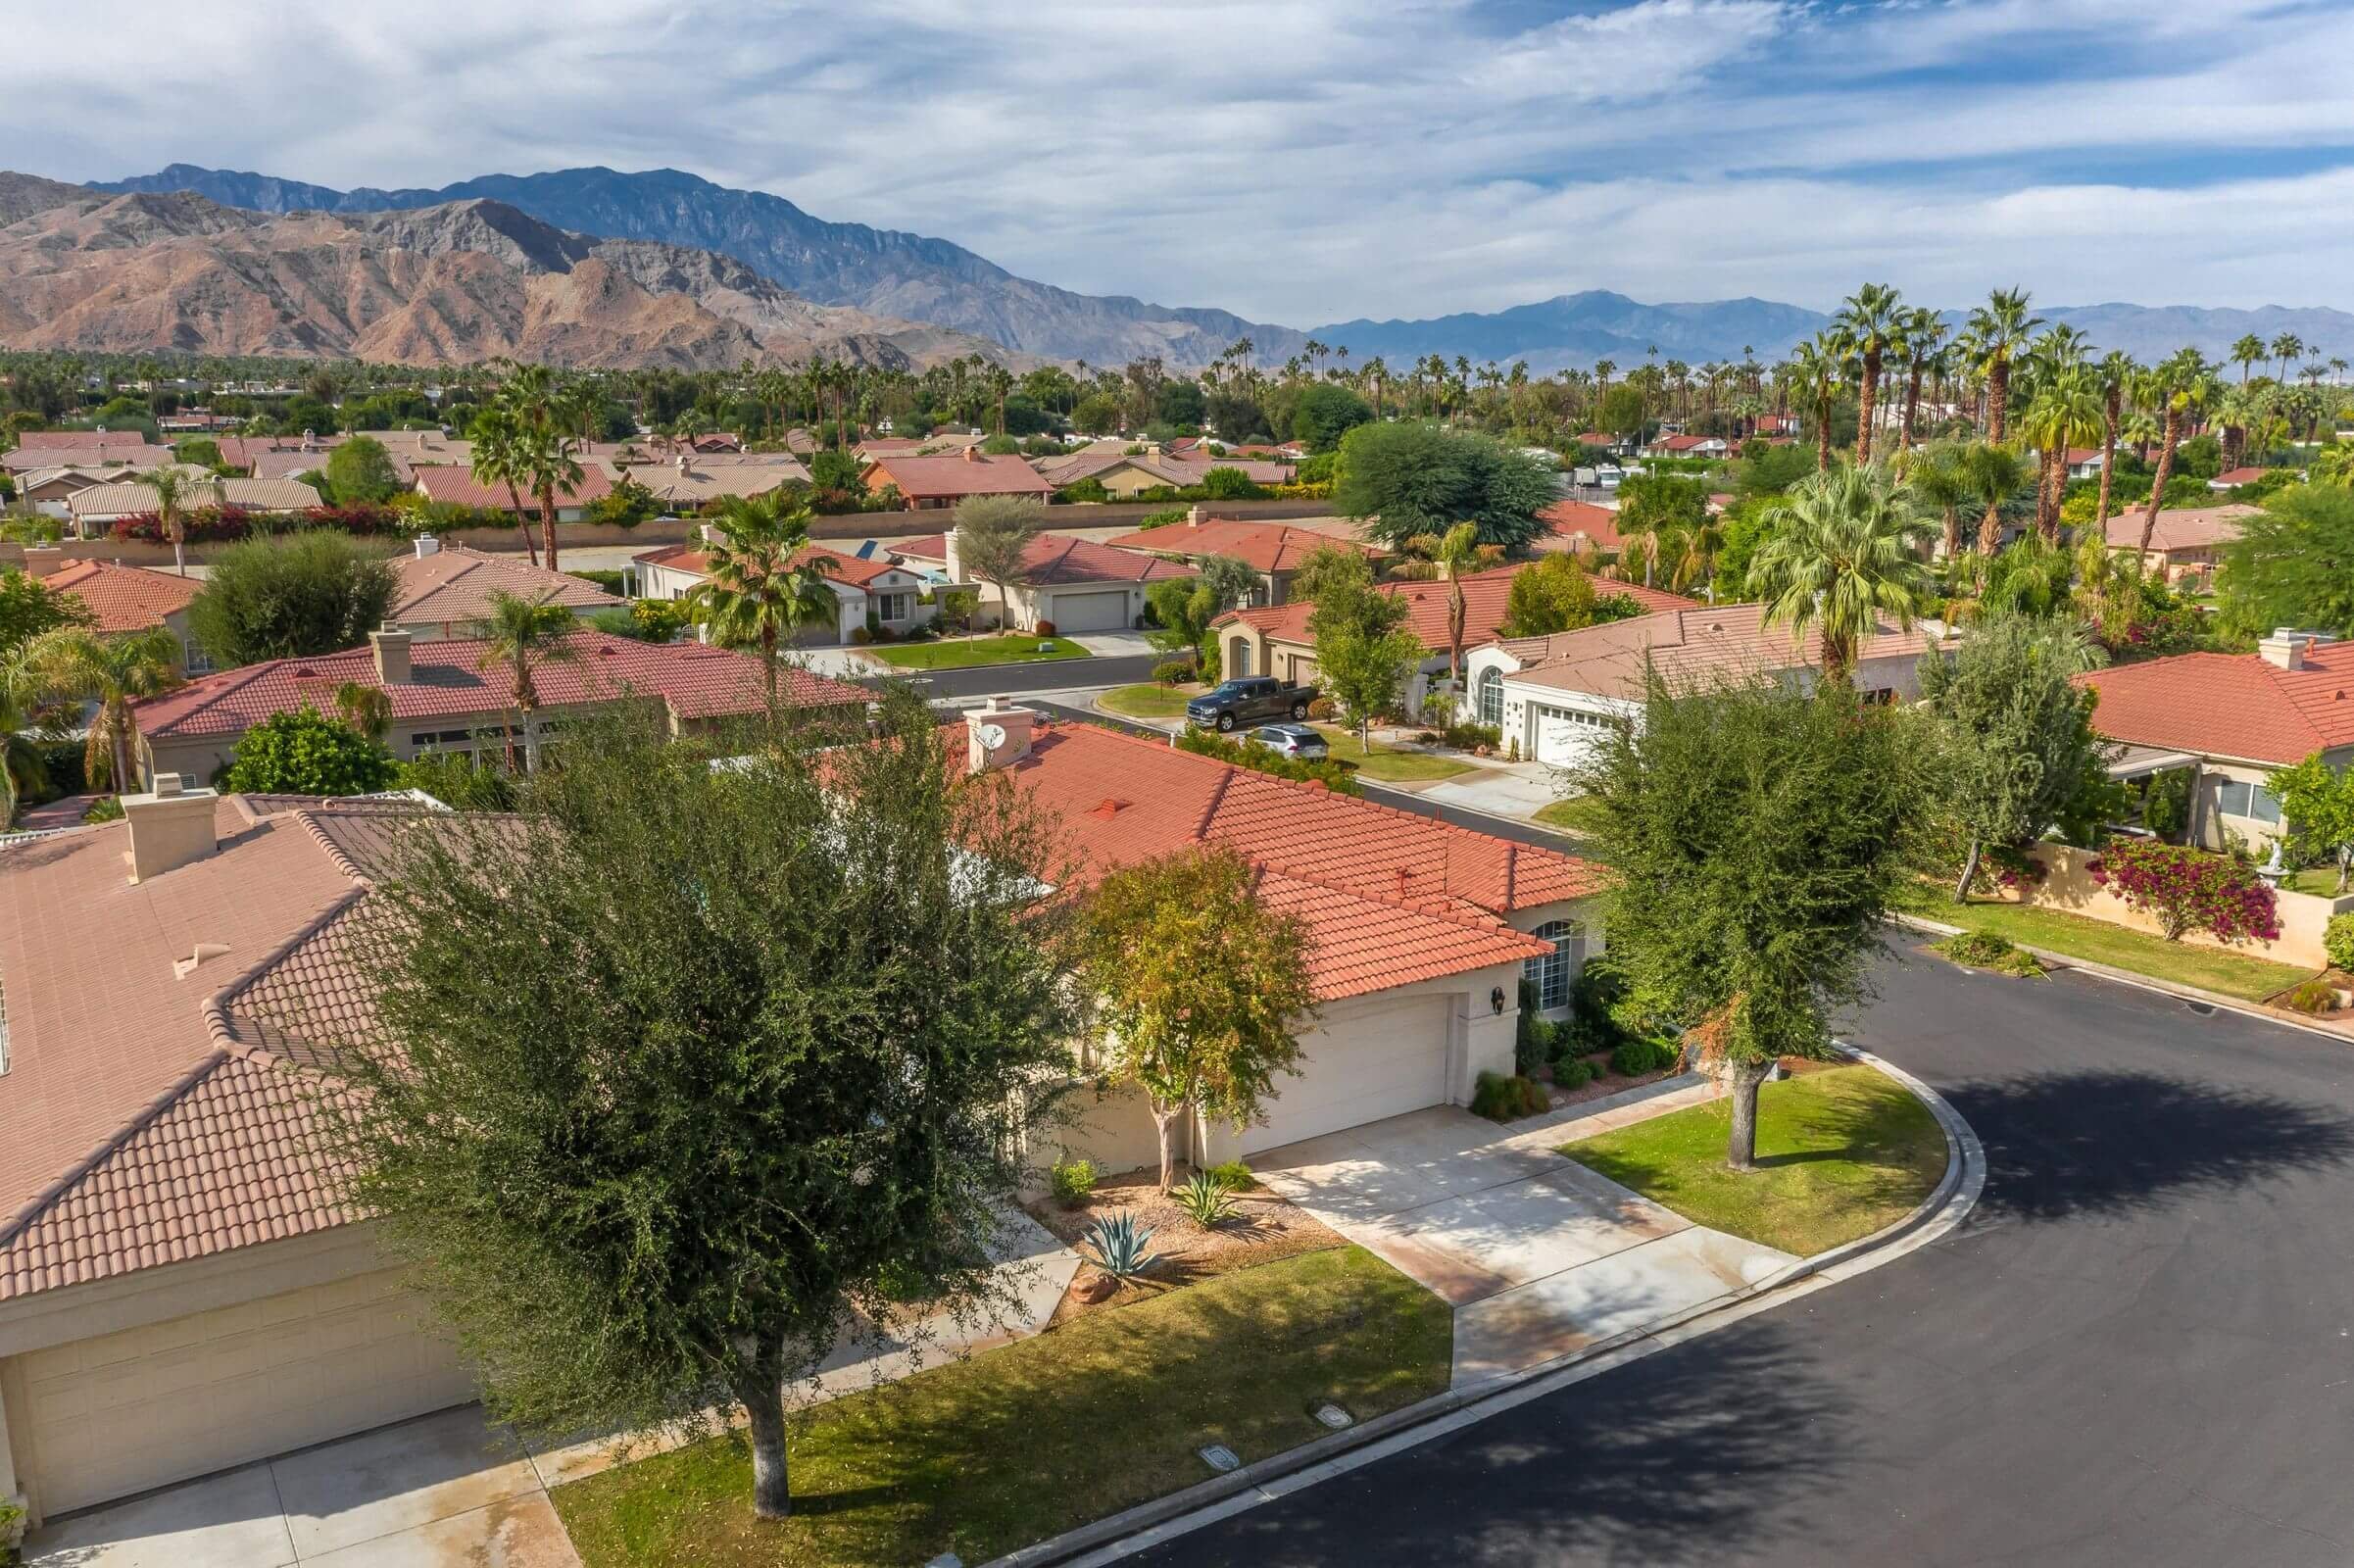 The Estates at Rancho Mirage Neighborhood